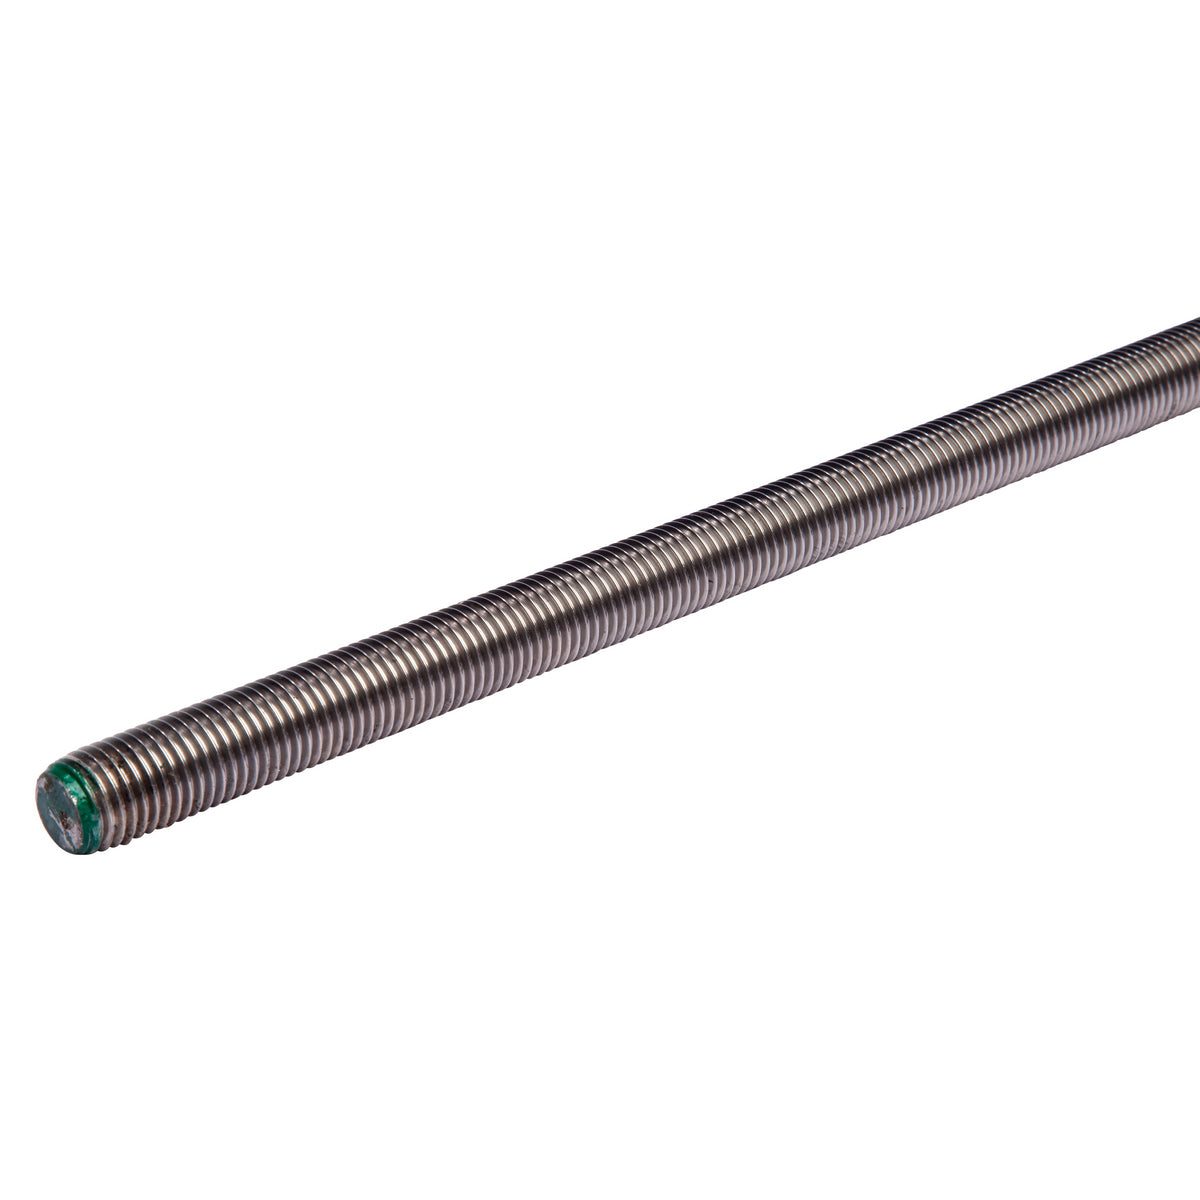 Stainless Steel Threaded Bar - M16 x 1 m